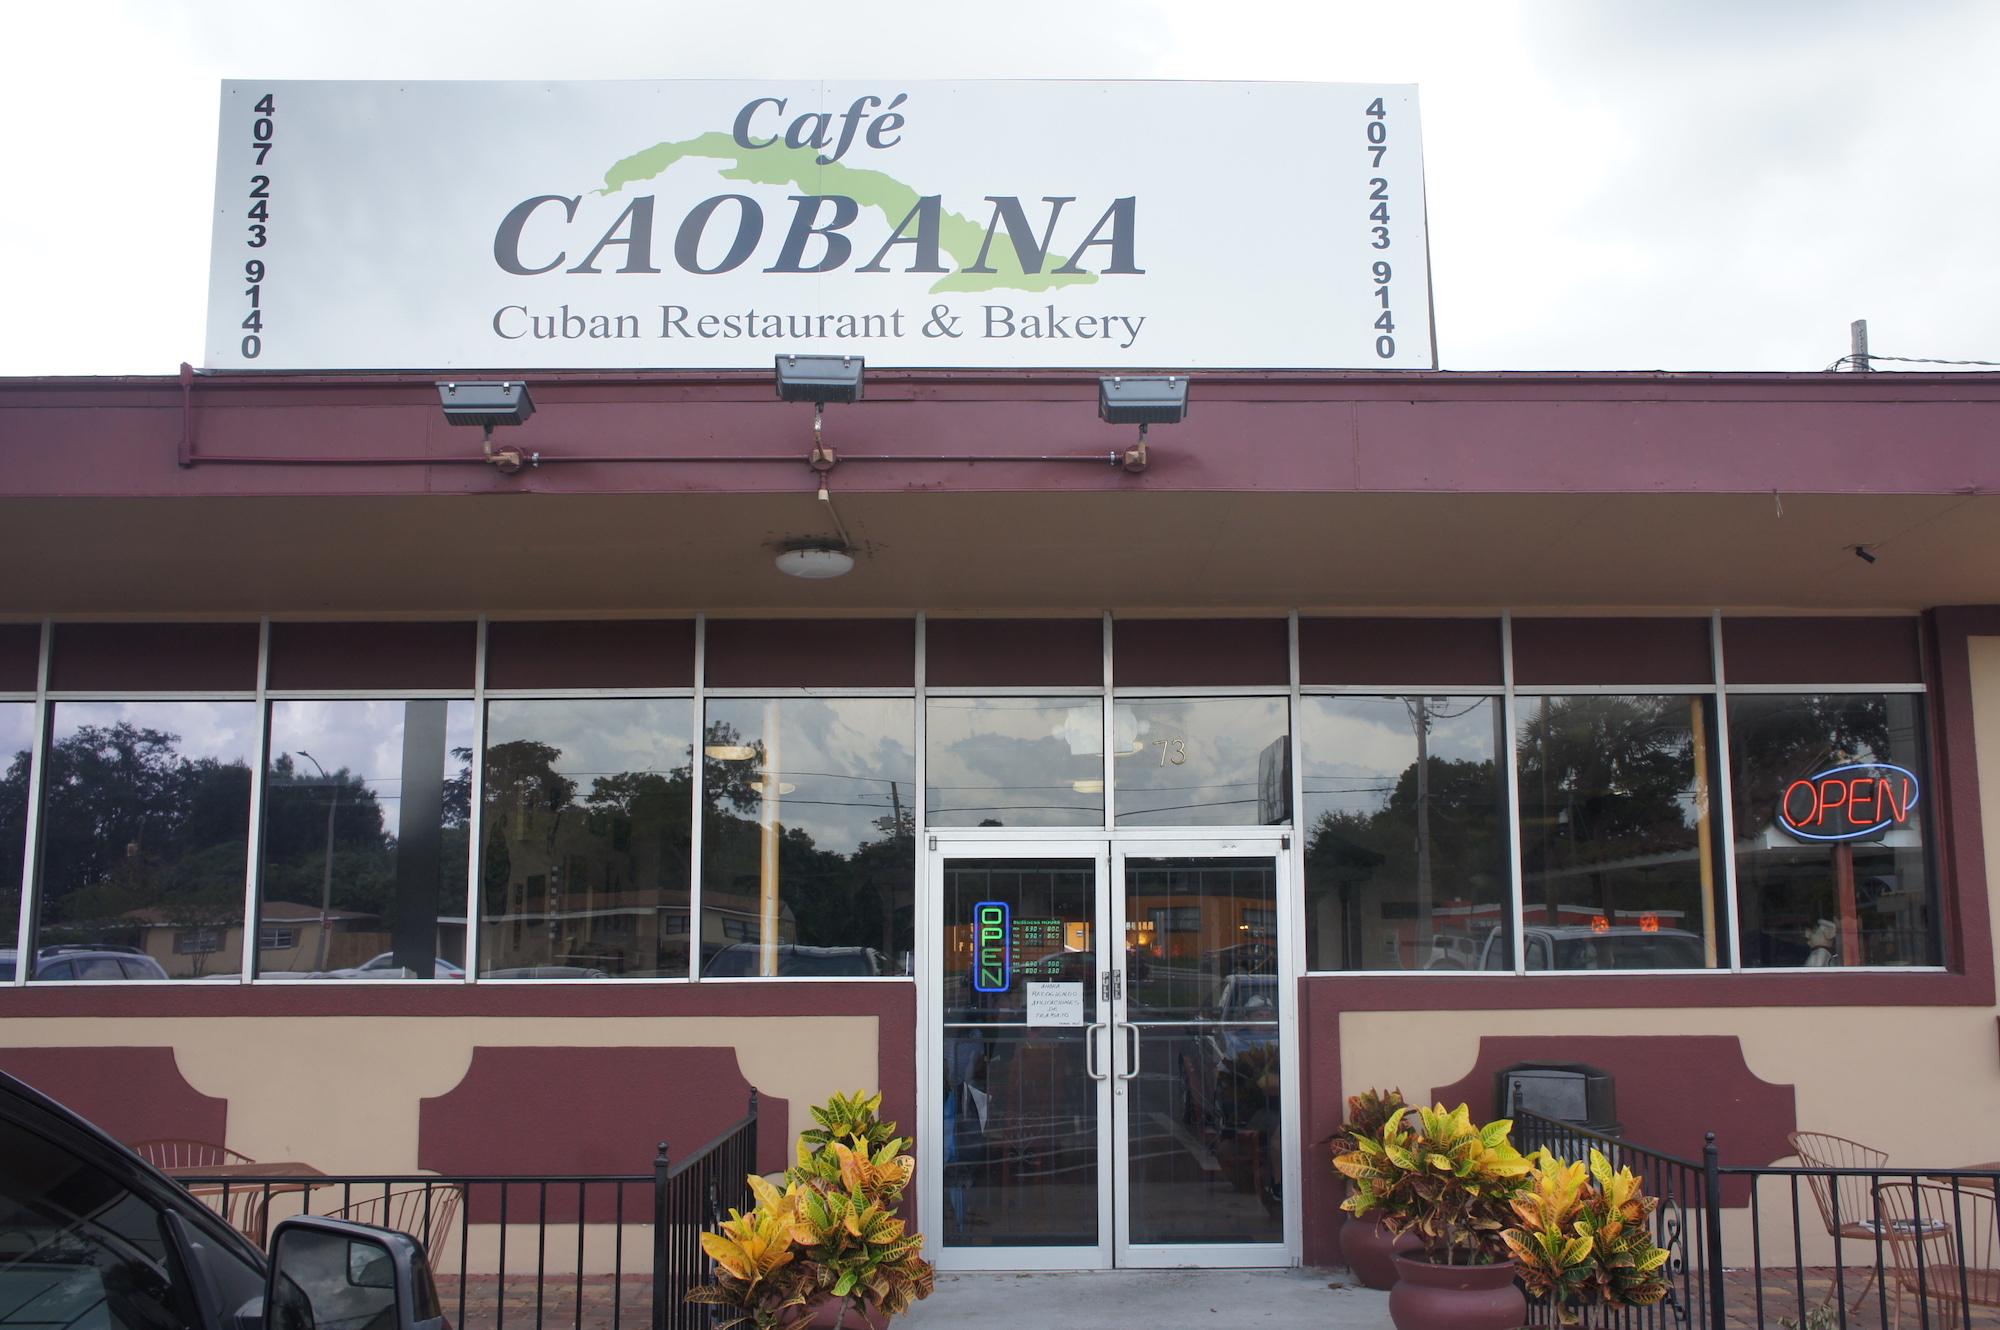 Cafe Caobana – Scenes